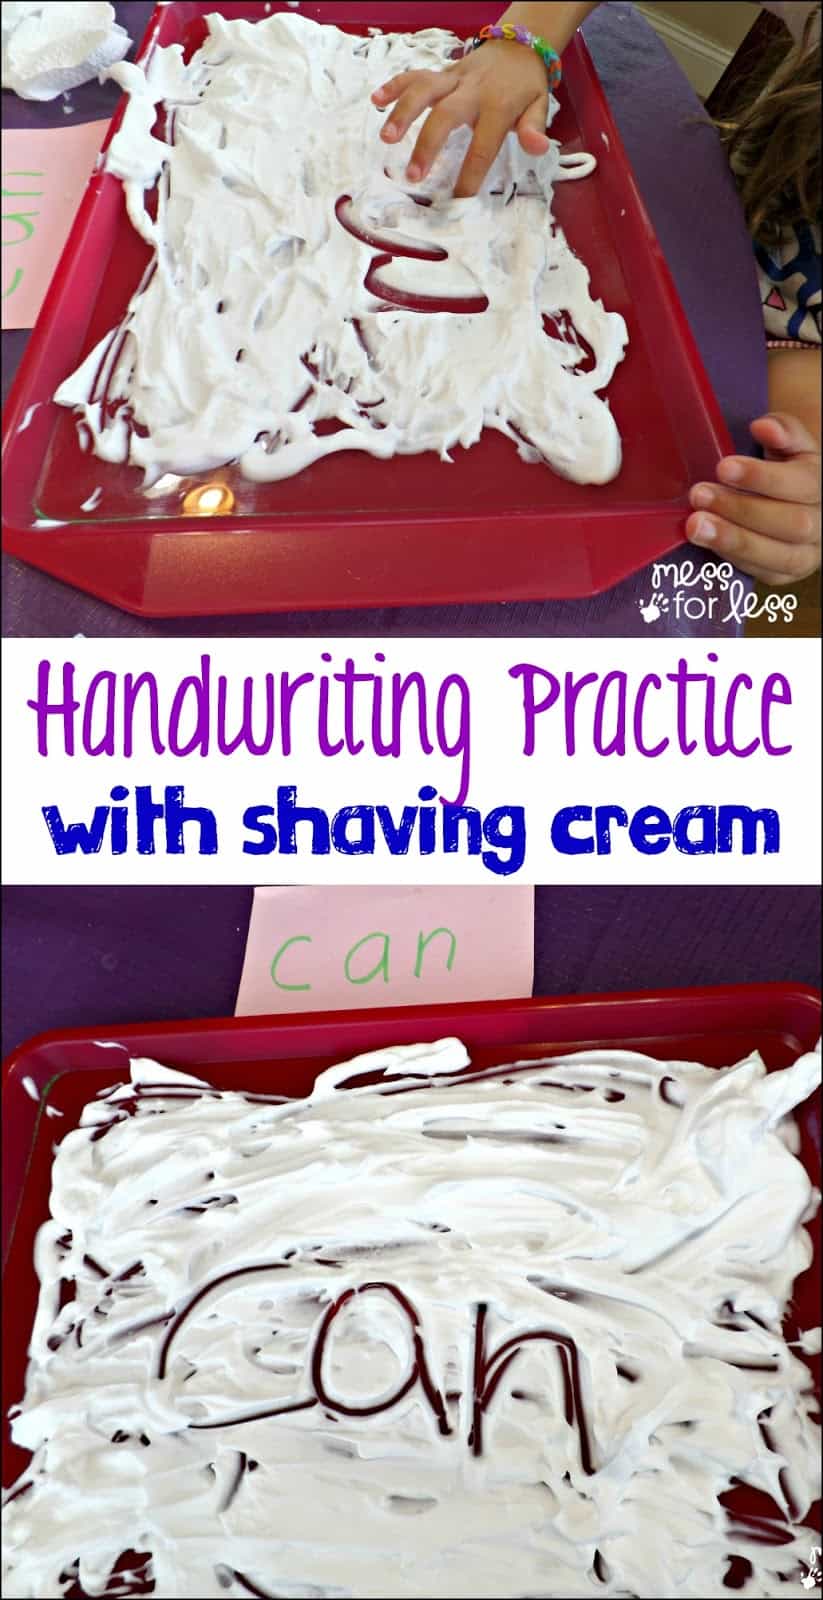 handwriting practice with shaving cream